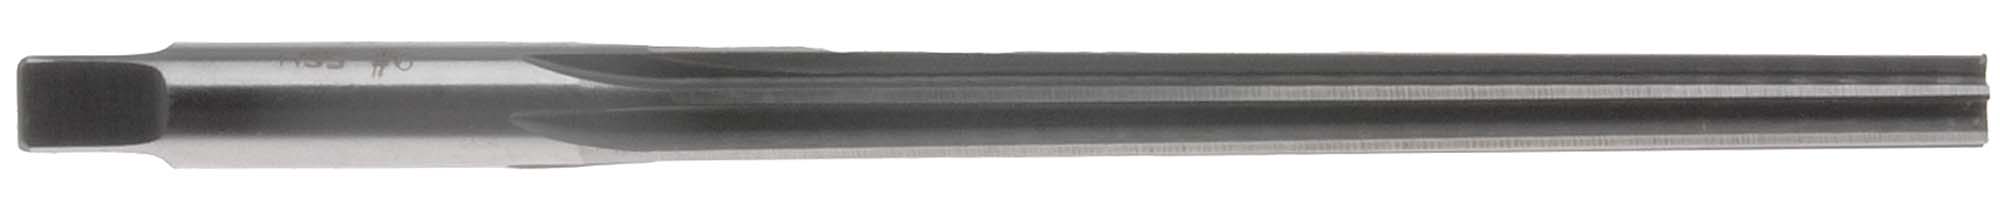 #4 Straight Flute Taper Pin Reamer, High Speed Steel